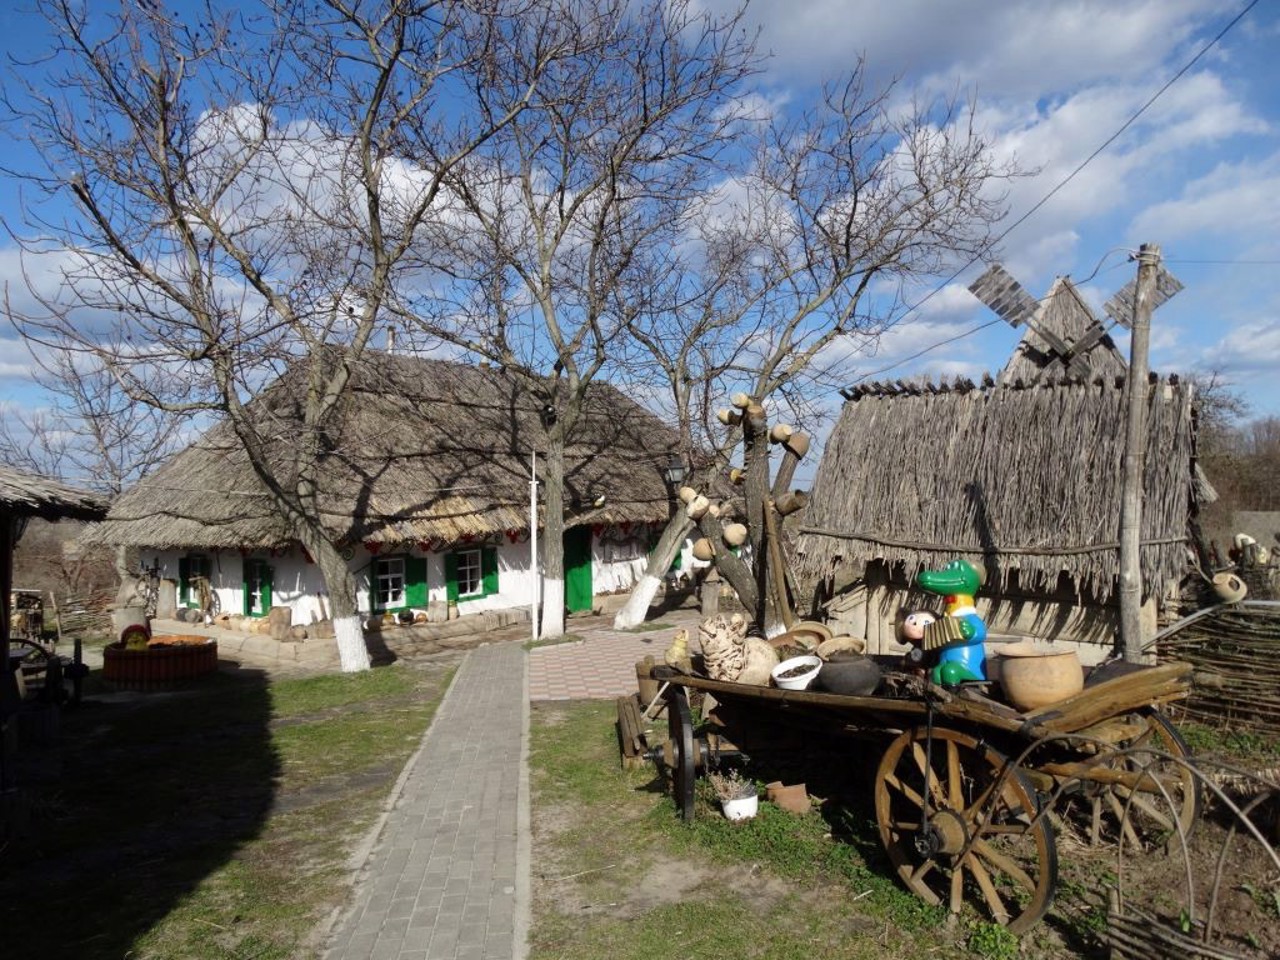 Subotiv village